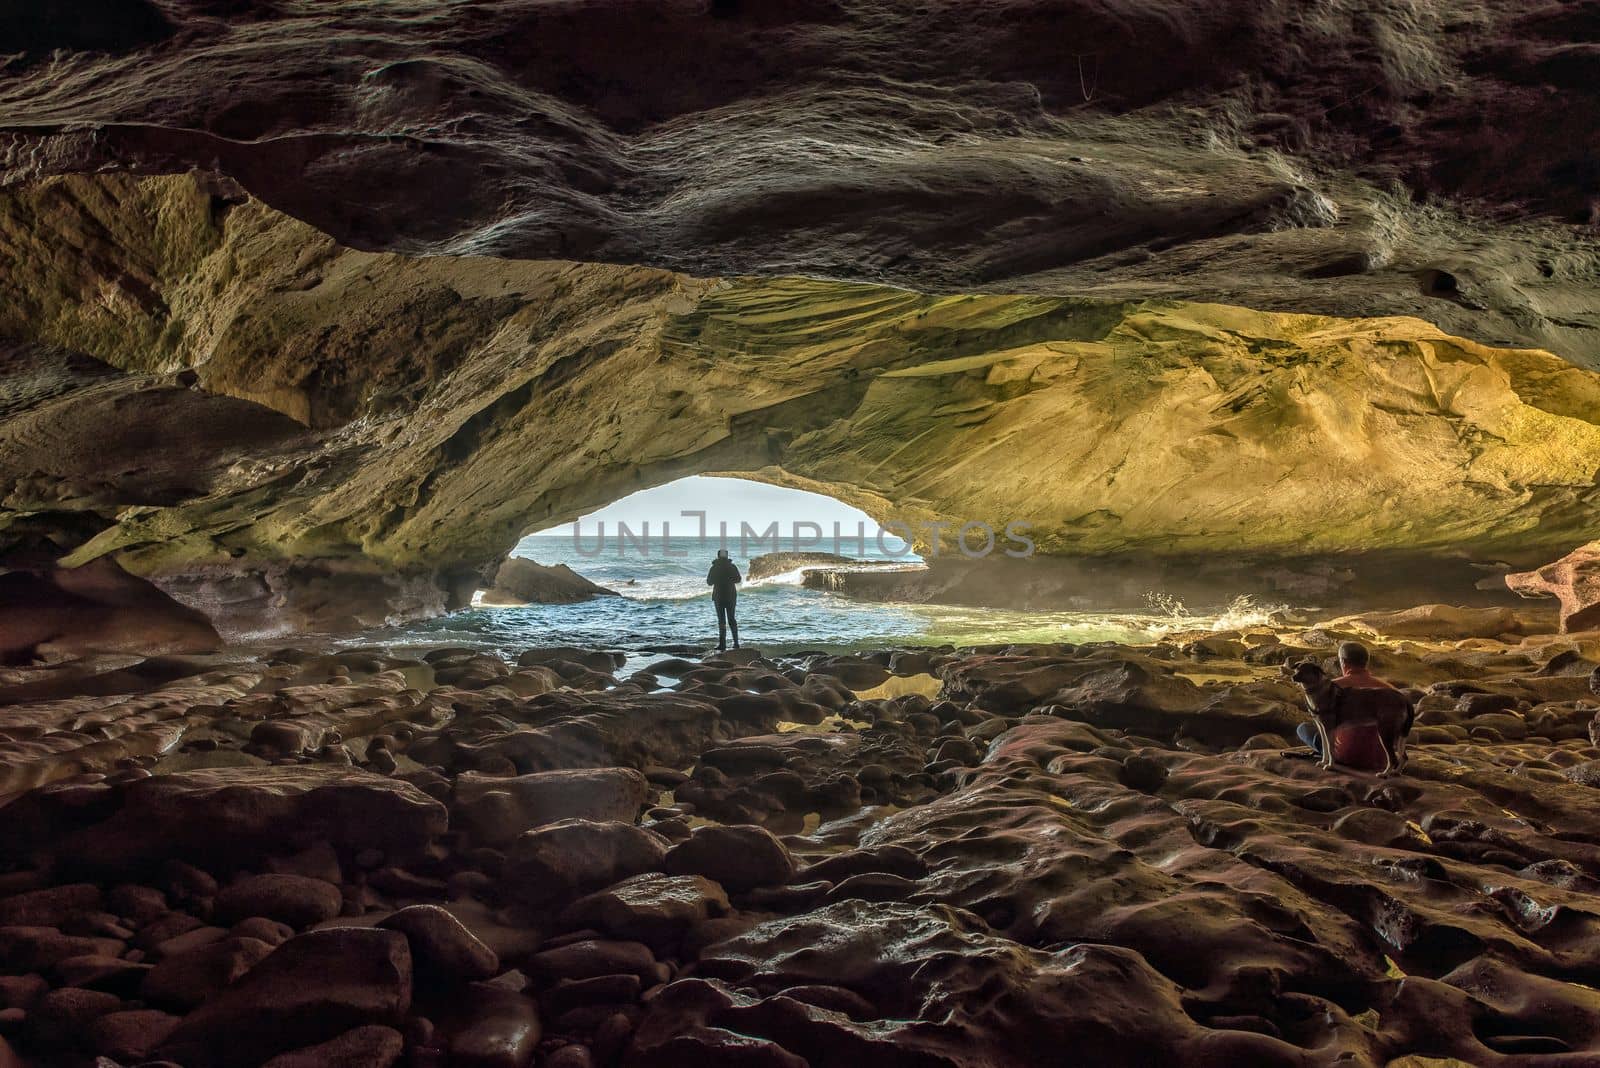 Inside the Waenhuiskrans Cave near Arniston by dpreezg